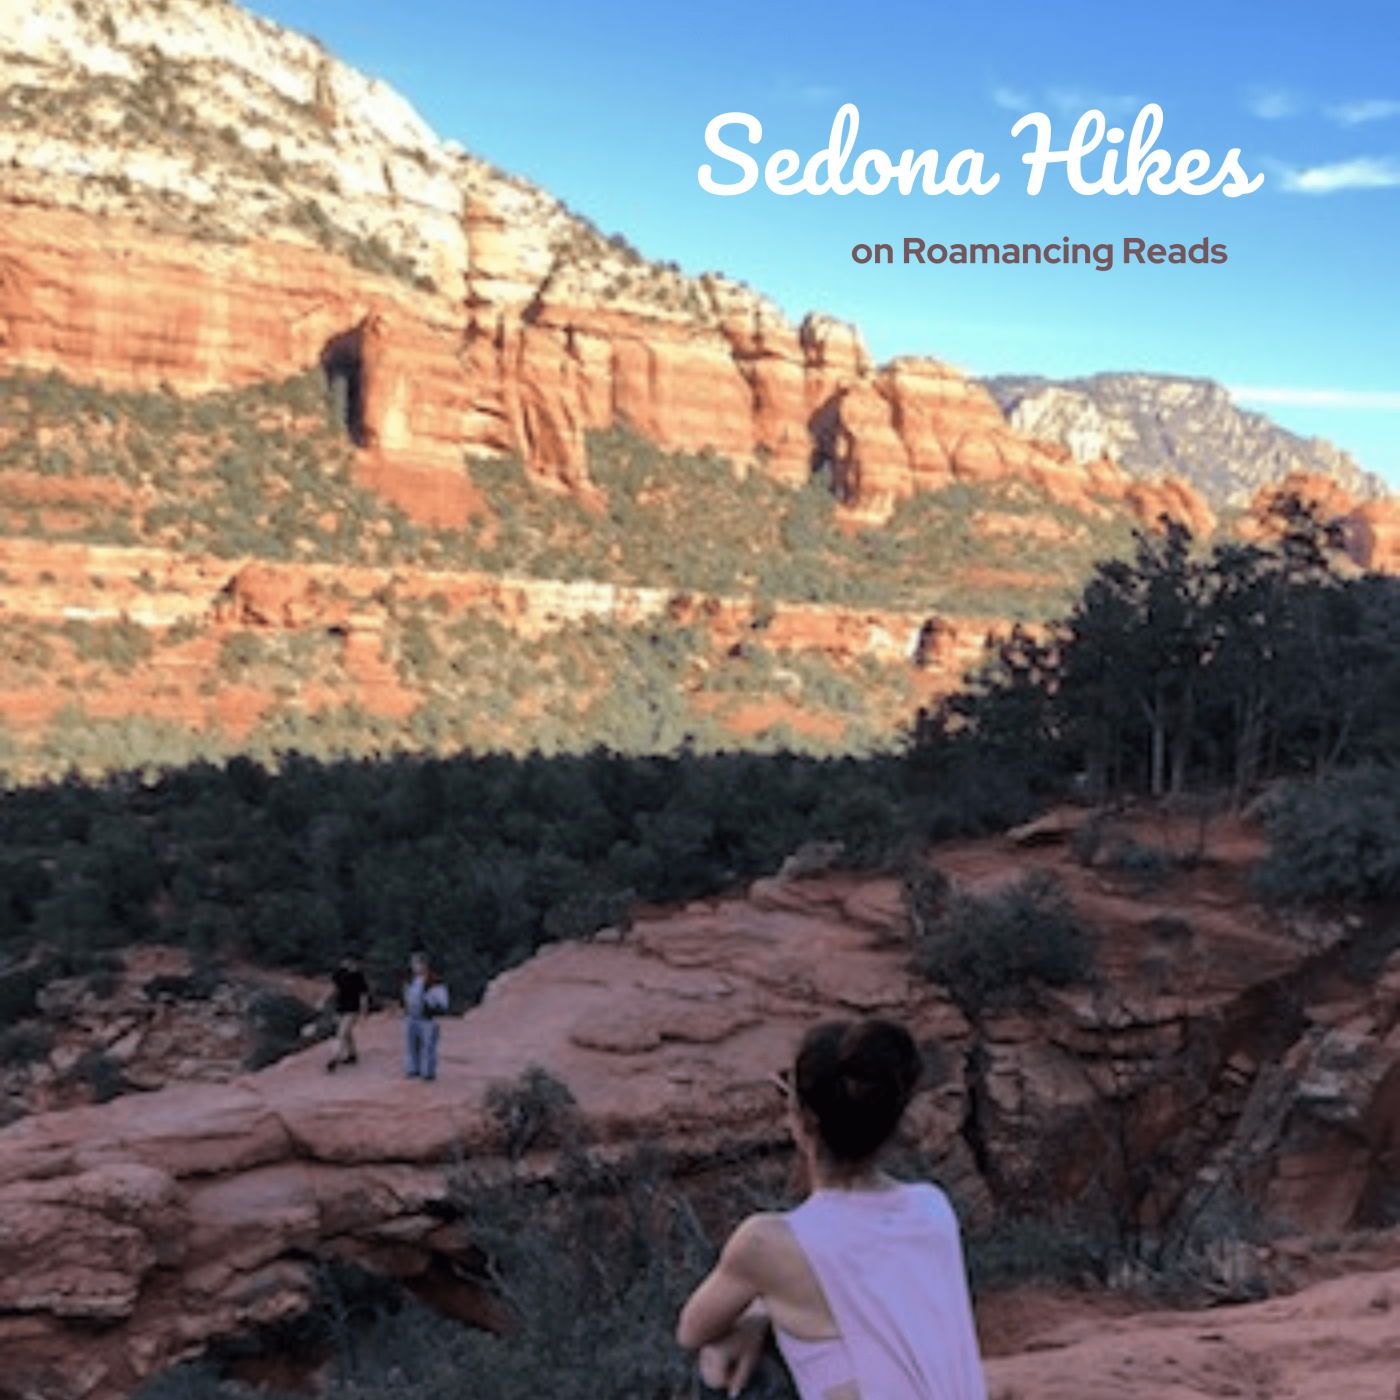 Sedona Day Trip and Hikes